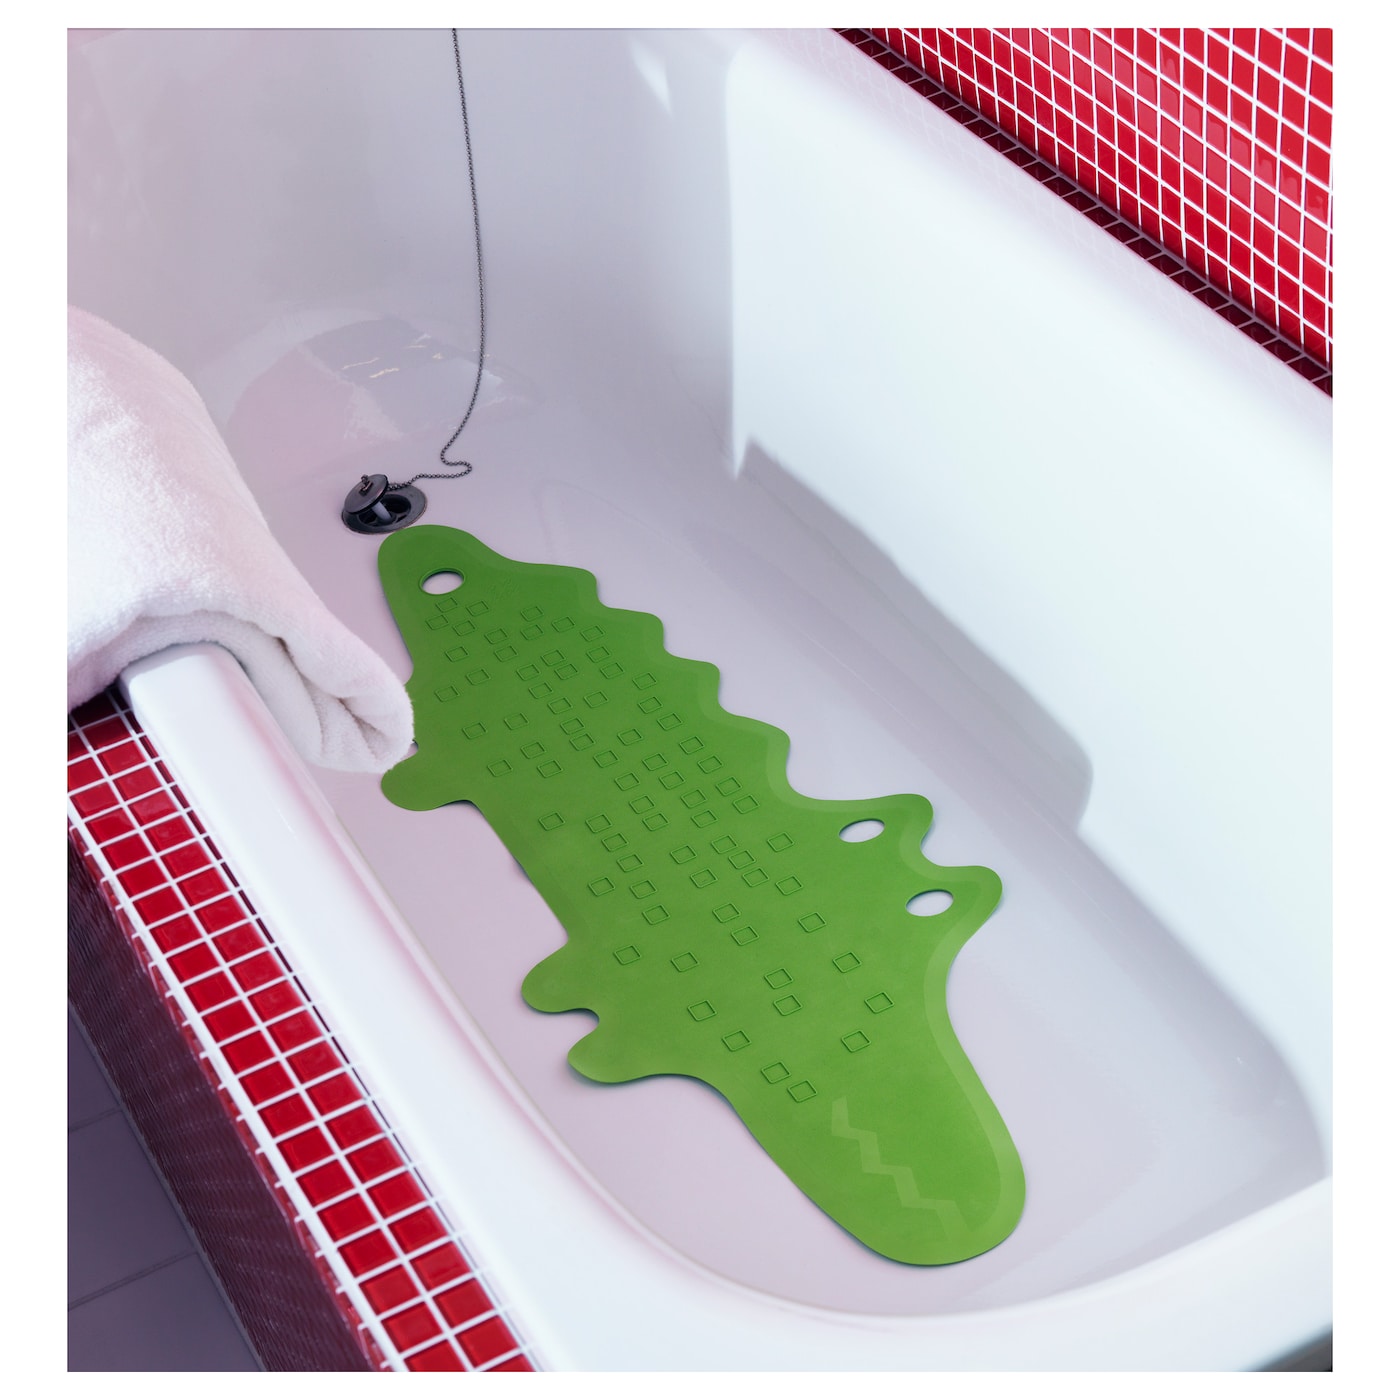 patrull-bathtub-mat-crocodile-green__0115444_pe264548_s5.jpg